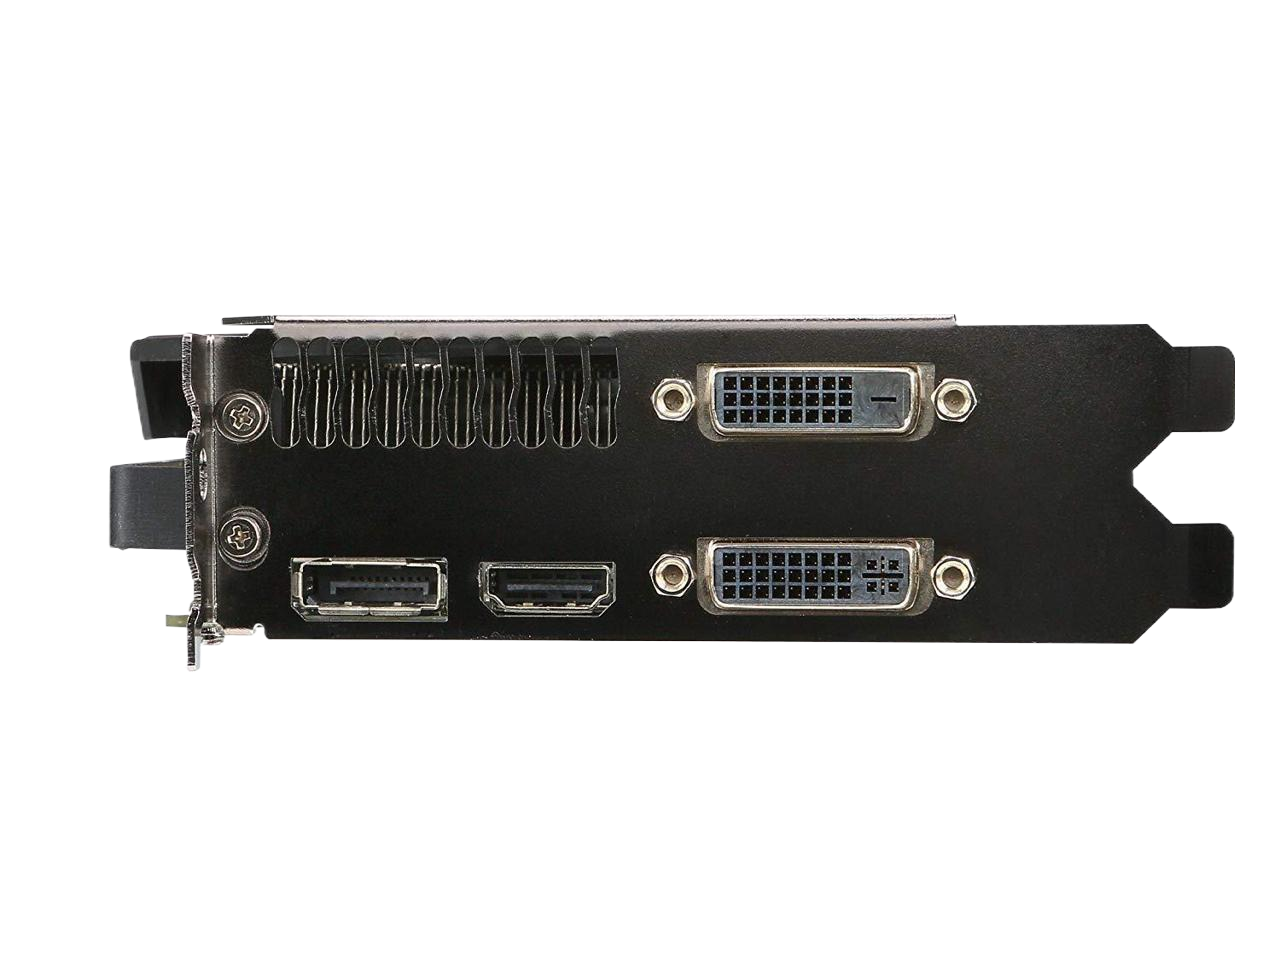 MSI GeForce GTX 770 Gaming 2GB 256-Bit GDDR5 PCI Express 3.0 SLI Support G-SYNC Support Video Card N770 TF 2GD5/OC